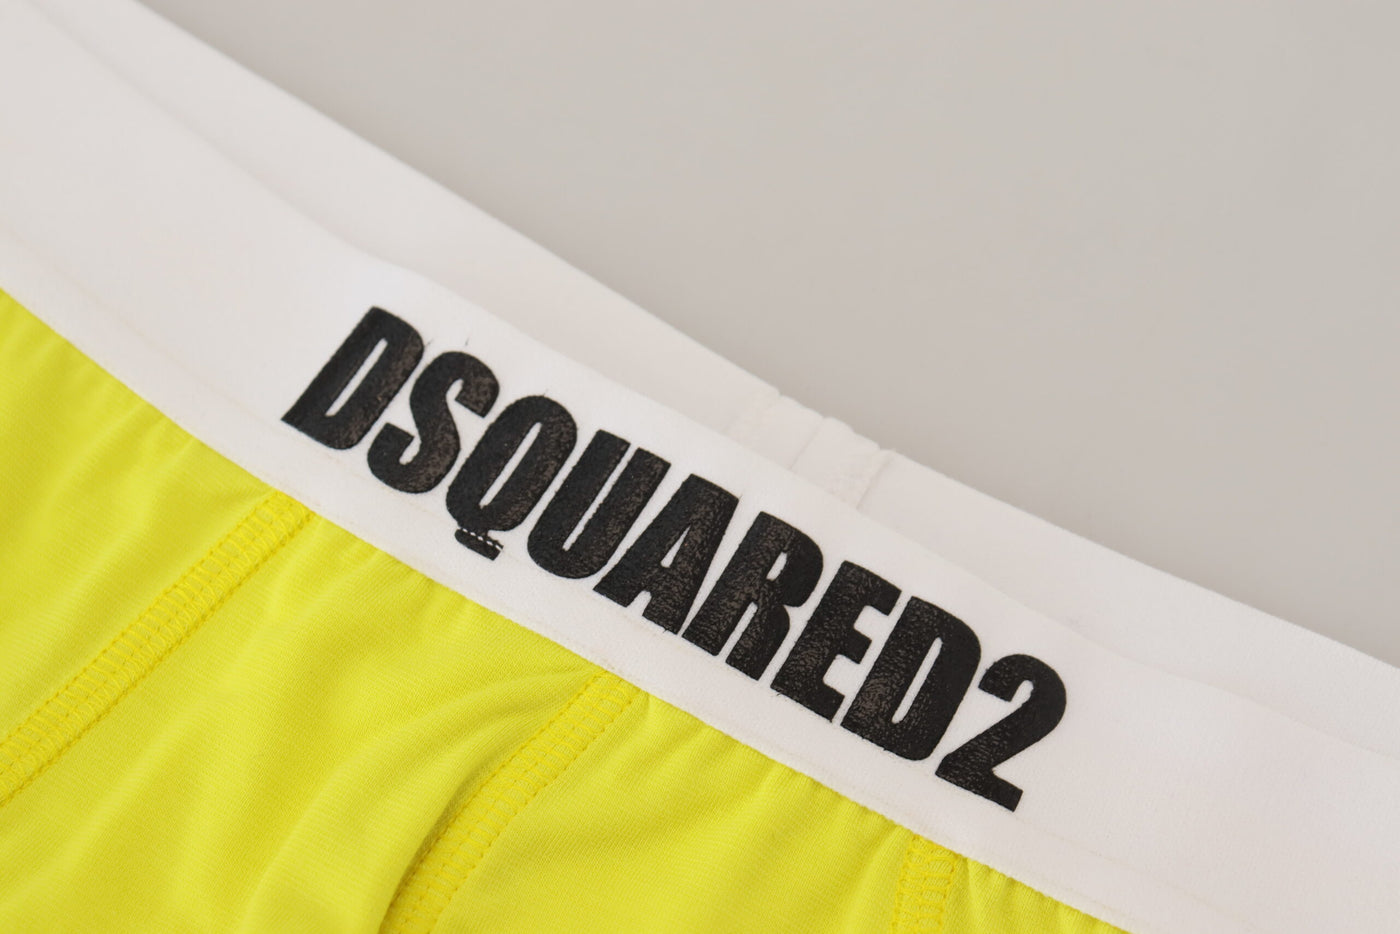 Dsquared² Yellow White Logo Modal Stretch Men Brief Underwear